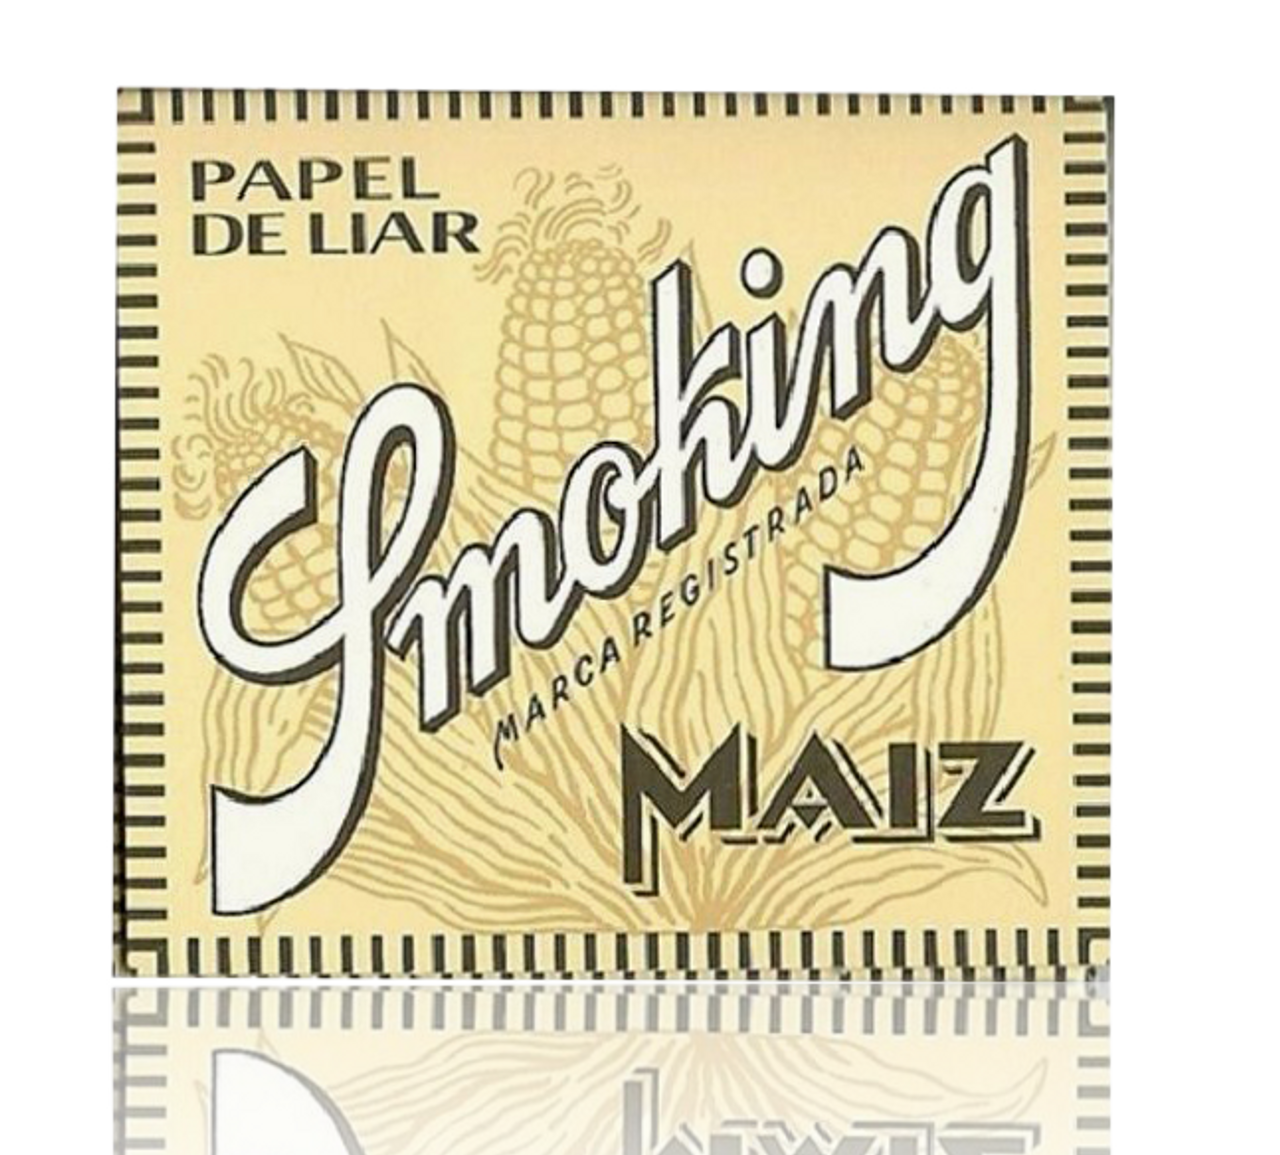  Smoking Maiz “Corn” 1 1/4 Cigarette Rolling Papers